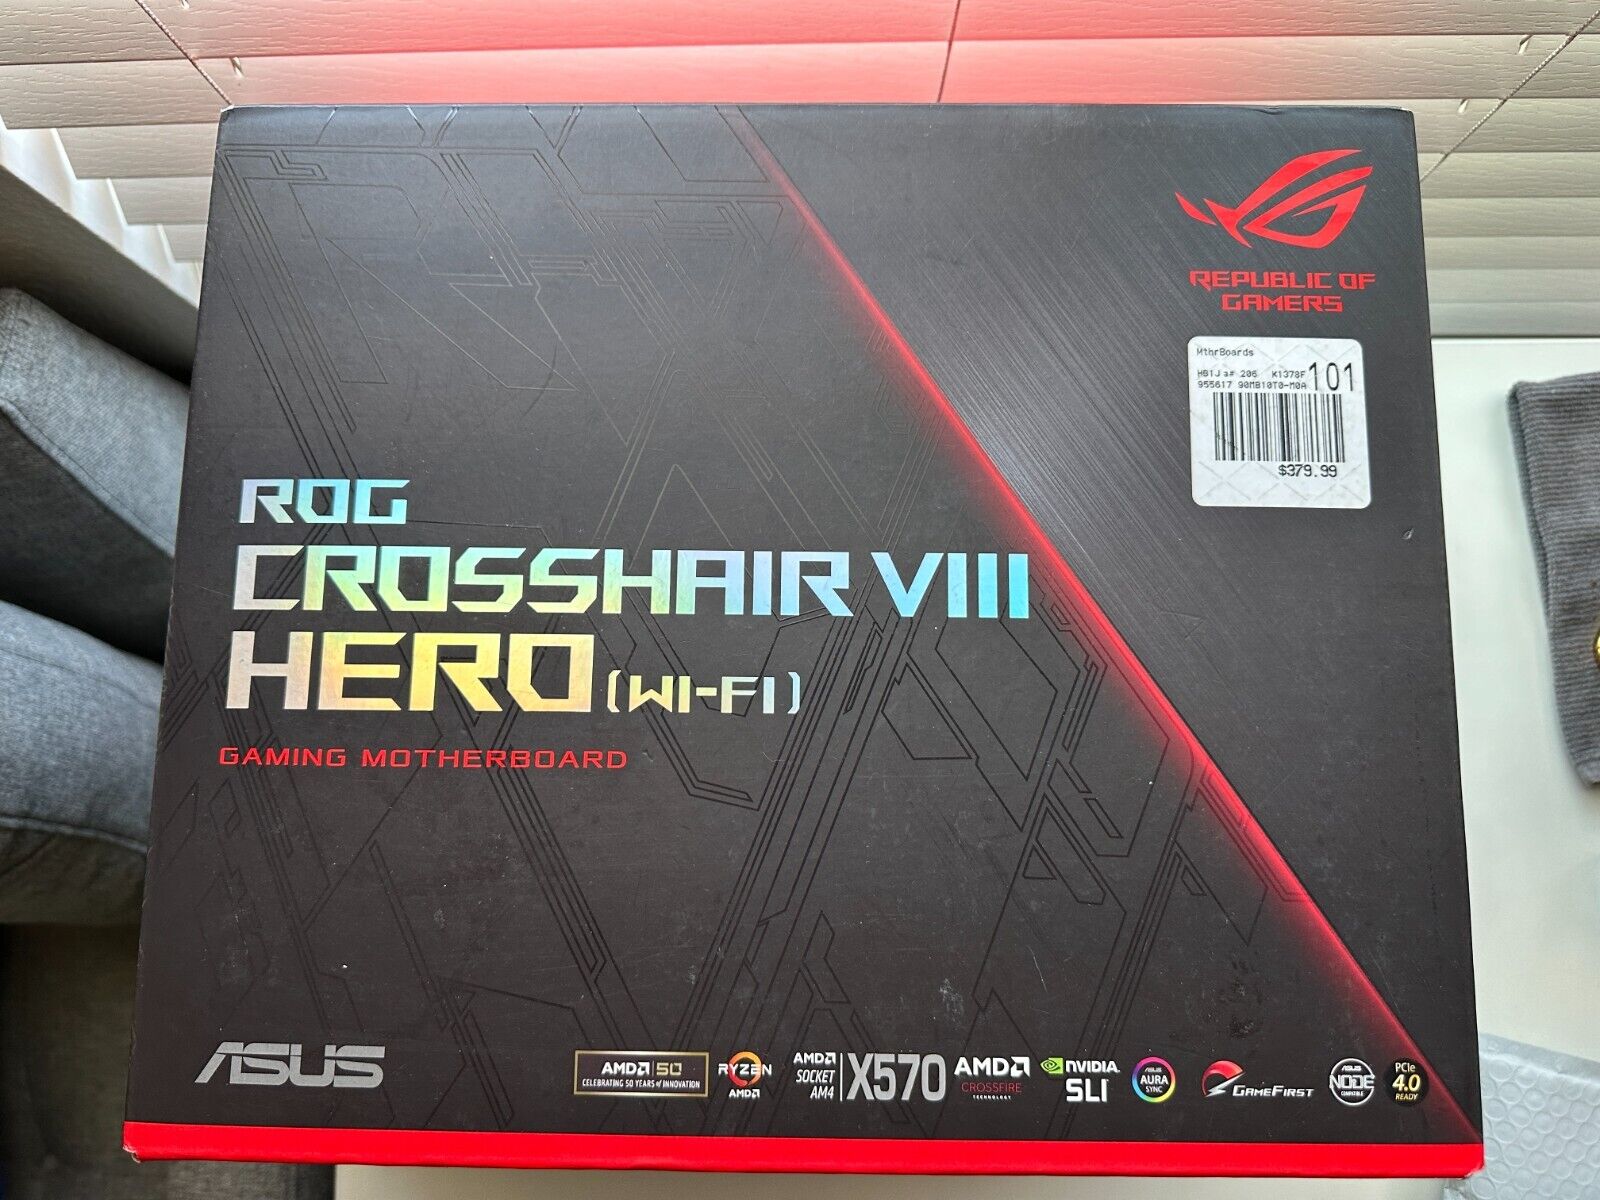 ASUS ROG Crosshair VIII Hero Wi-Fi X570 Motherboard for AMD AM4 Ryzen 5000 3000